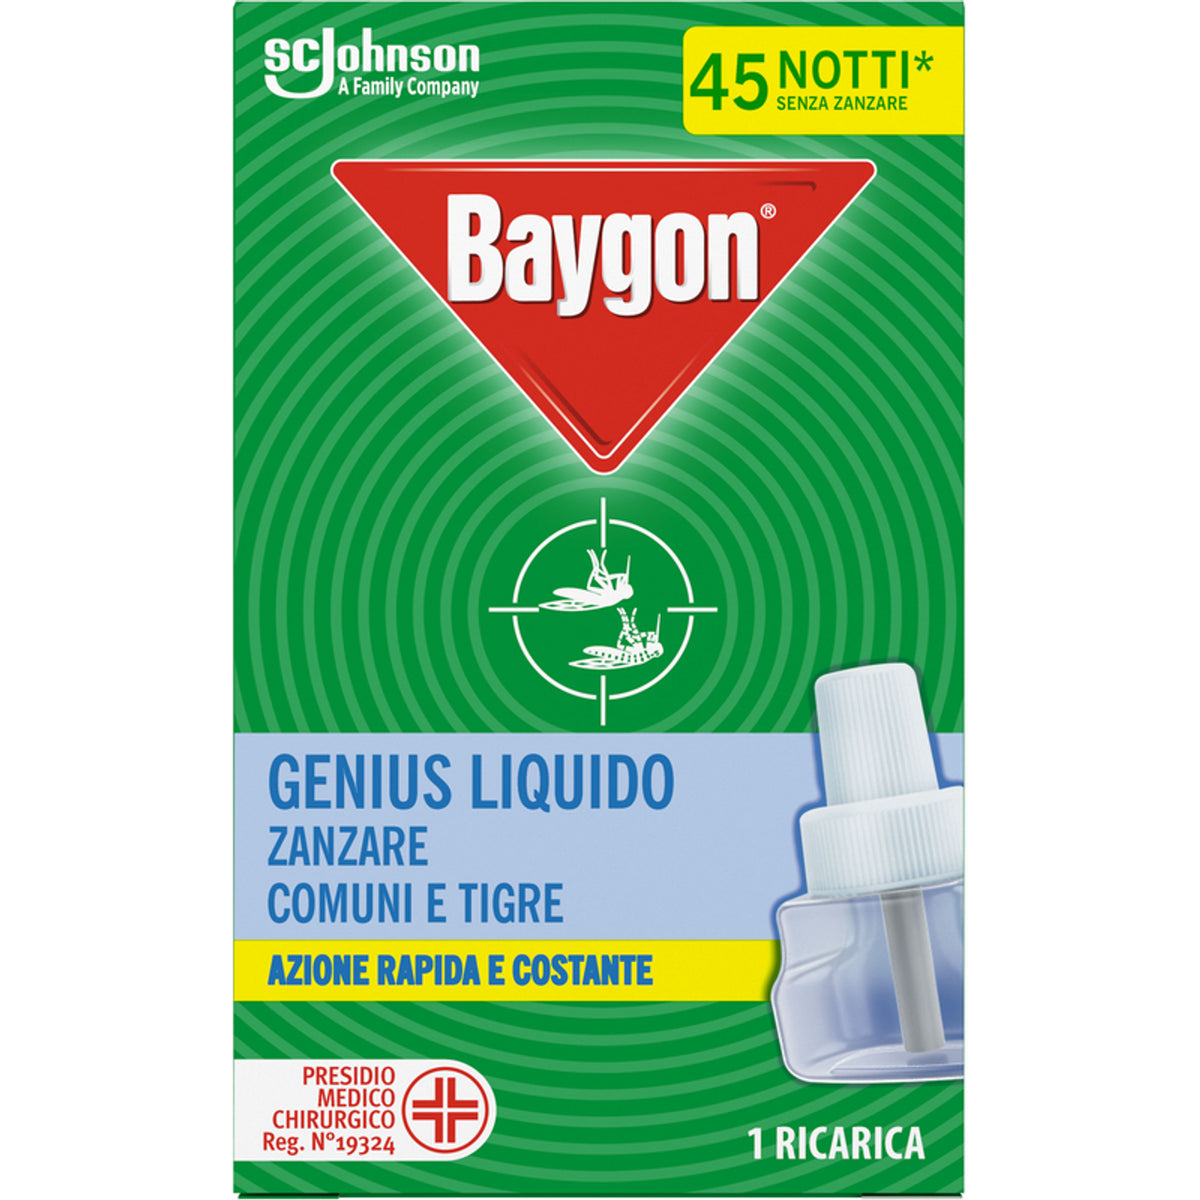 Baygon genius insecticide mosquito liquid charging 45 nights